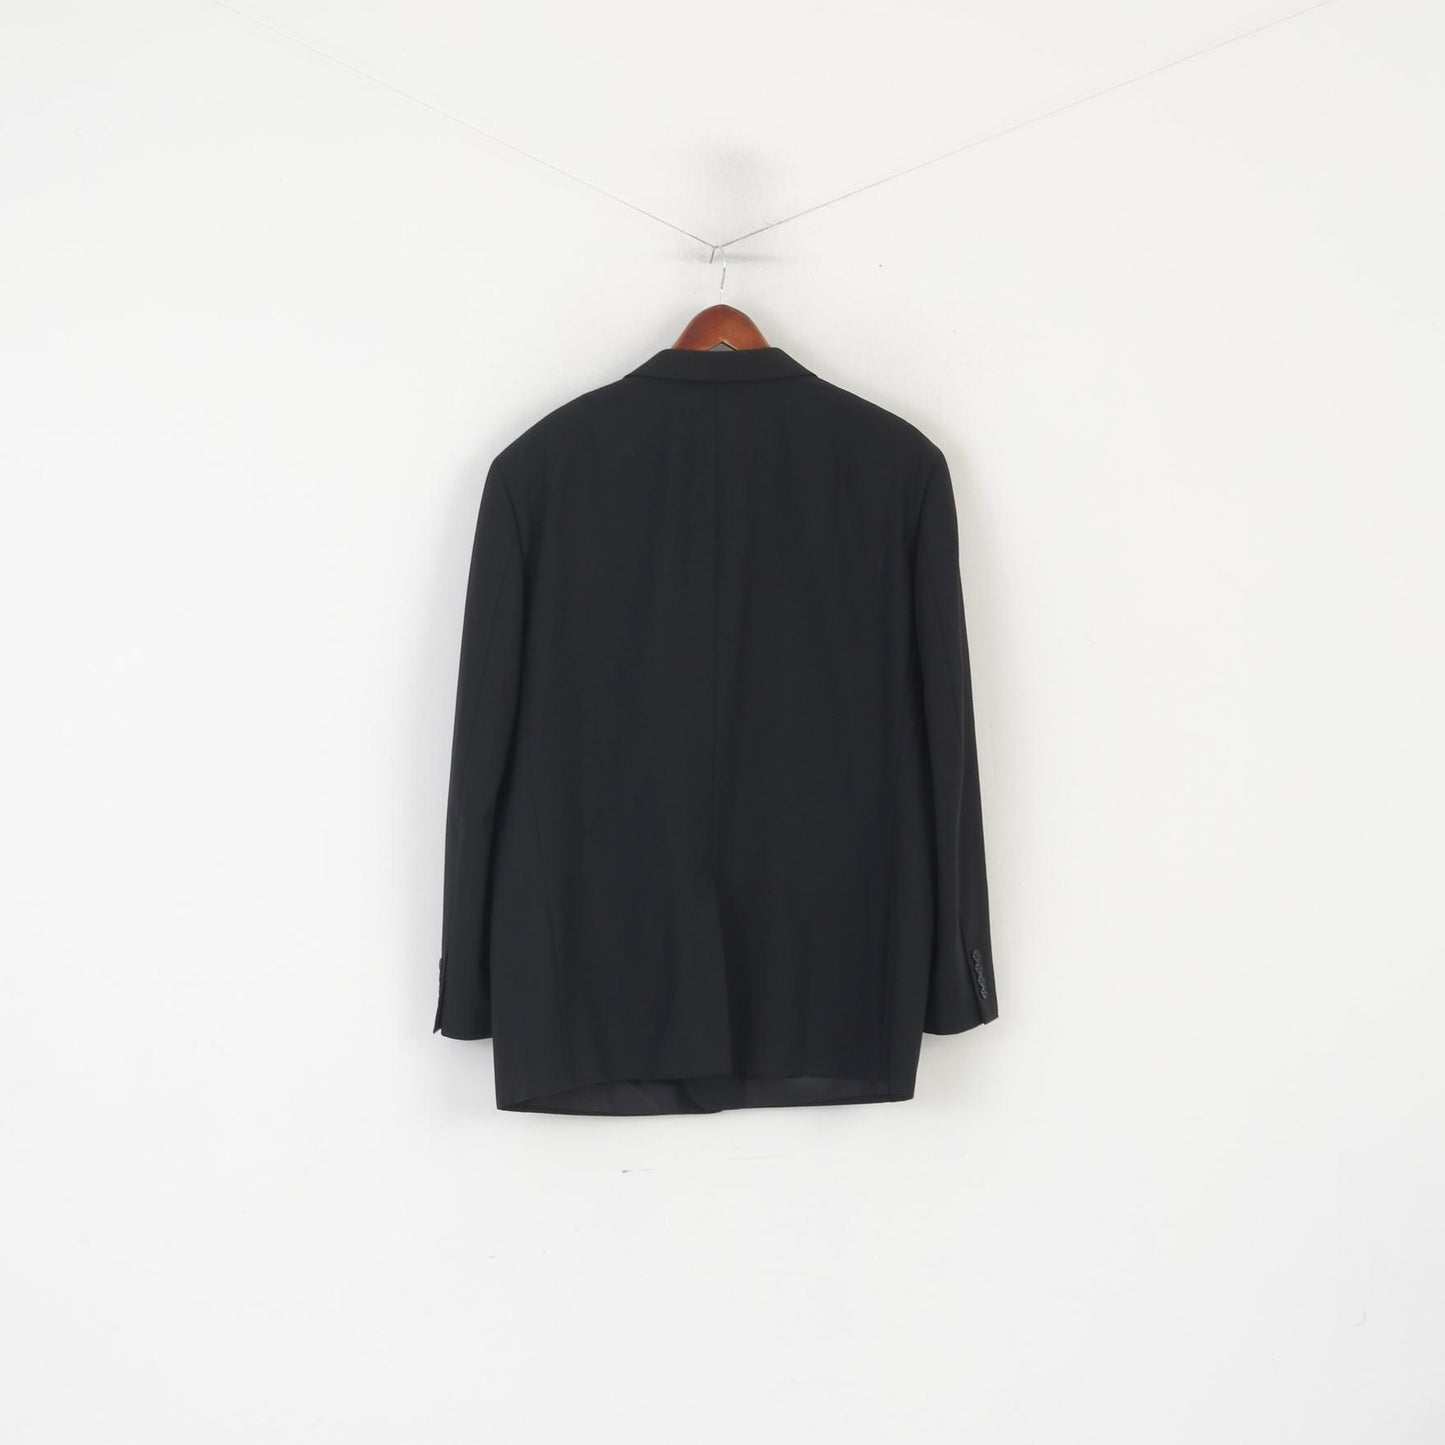 Daniel Grahame Men 48 Blazer Black Shiny Wool Lycra Single Breasted Jacket